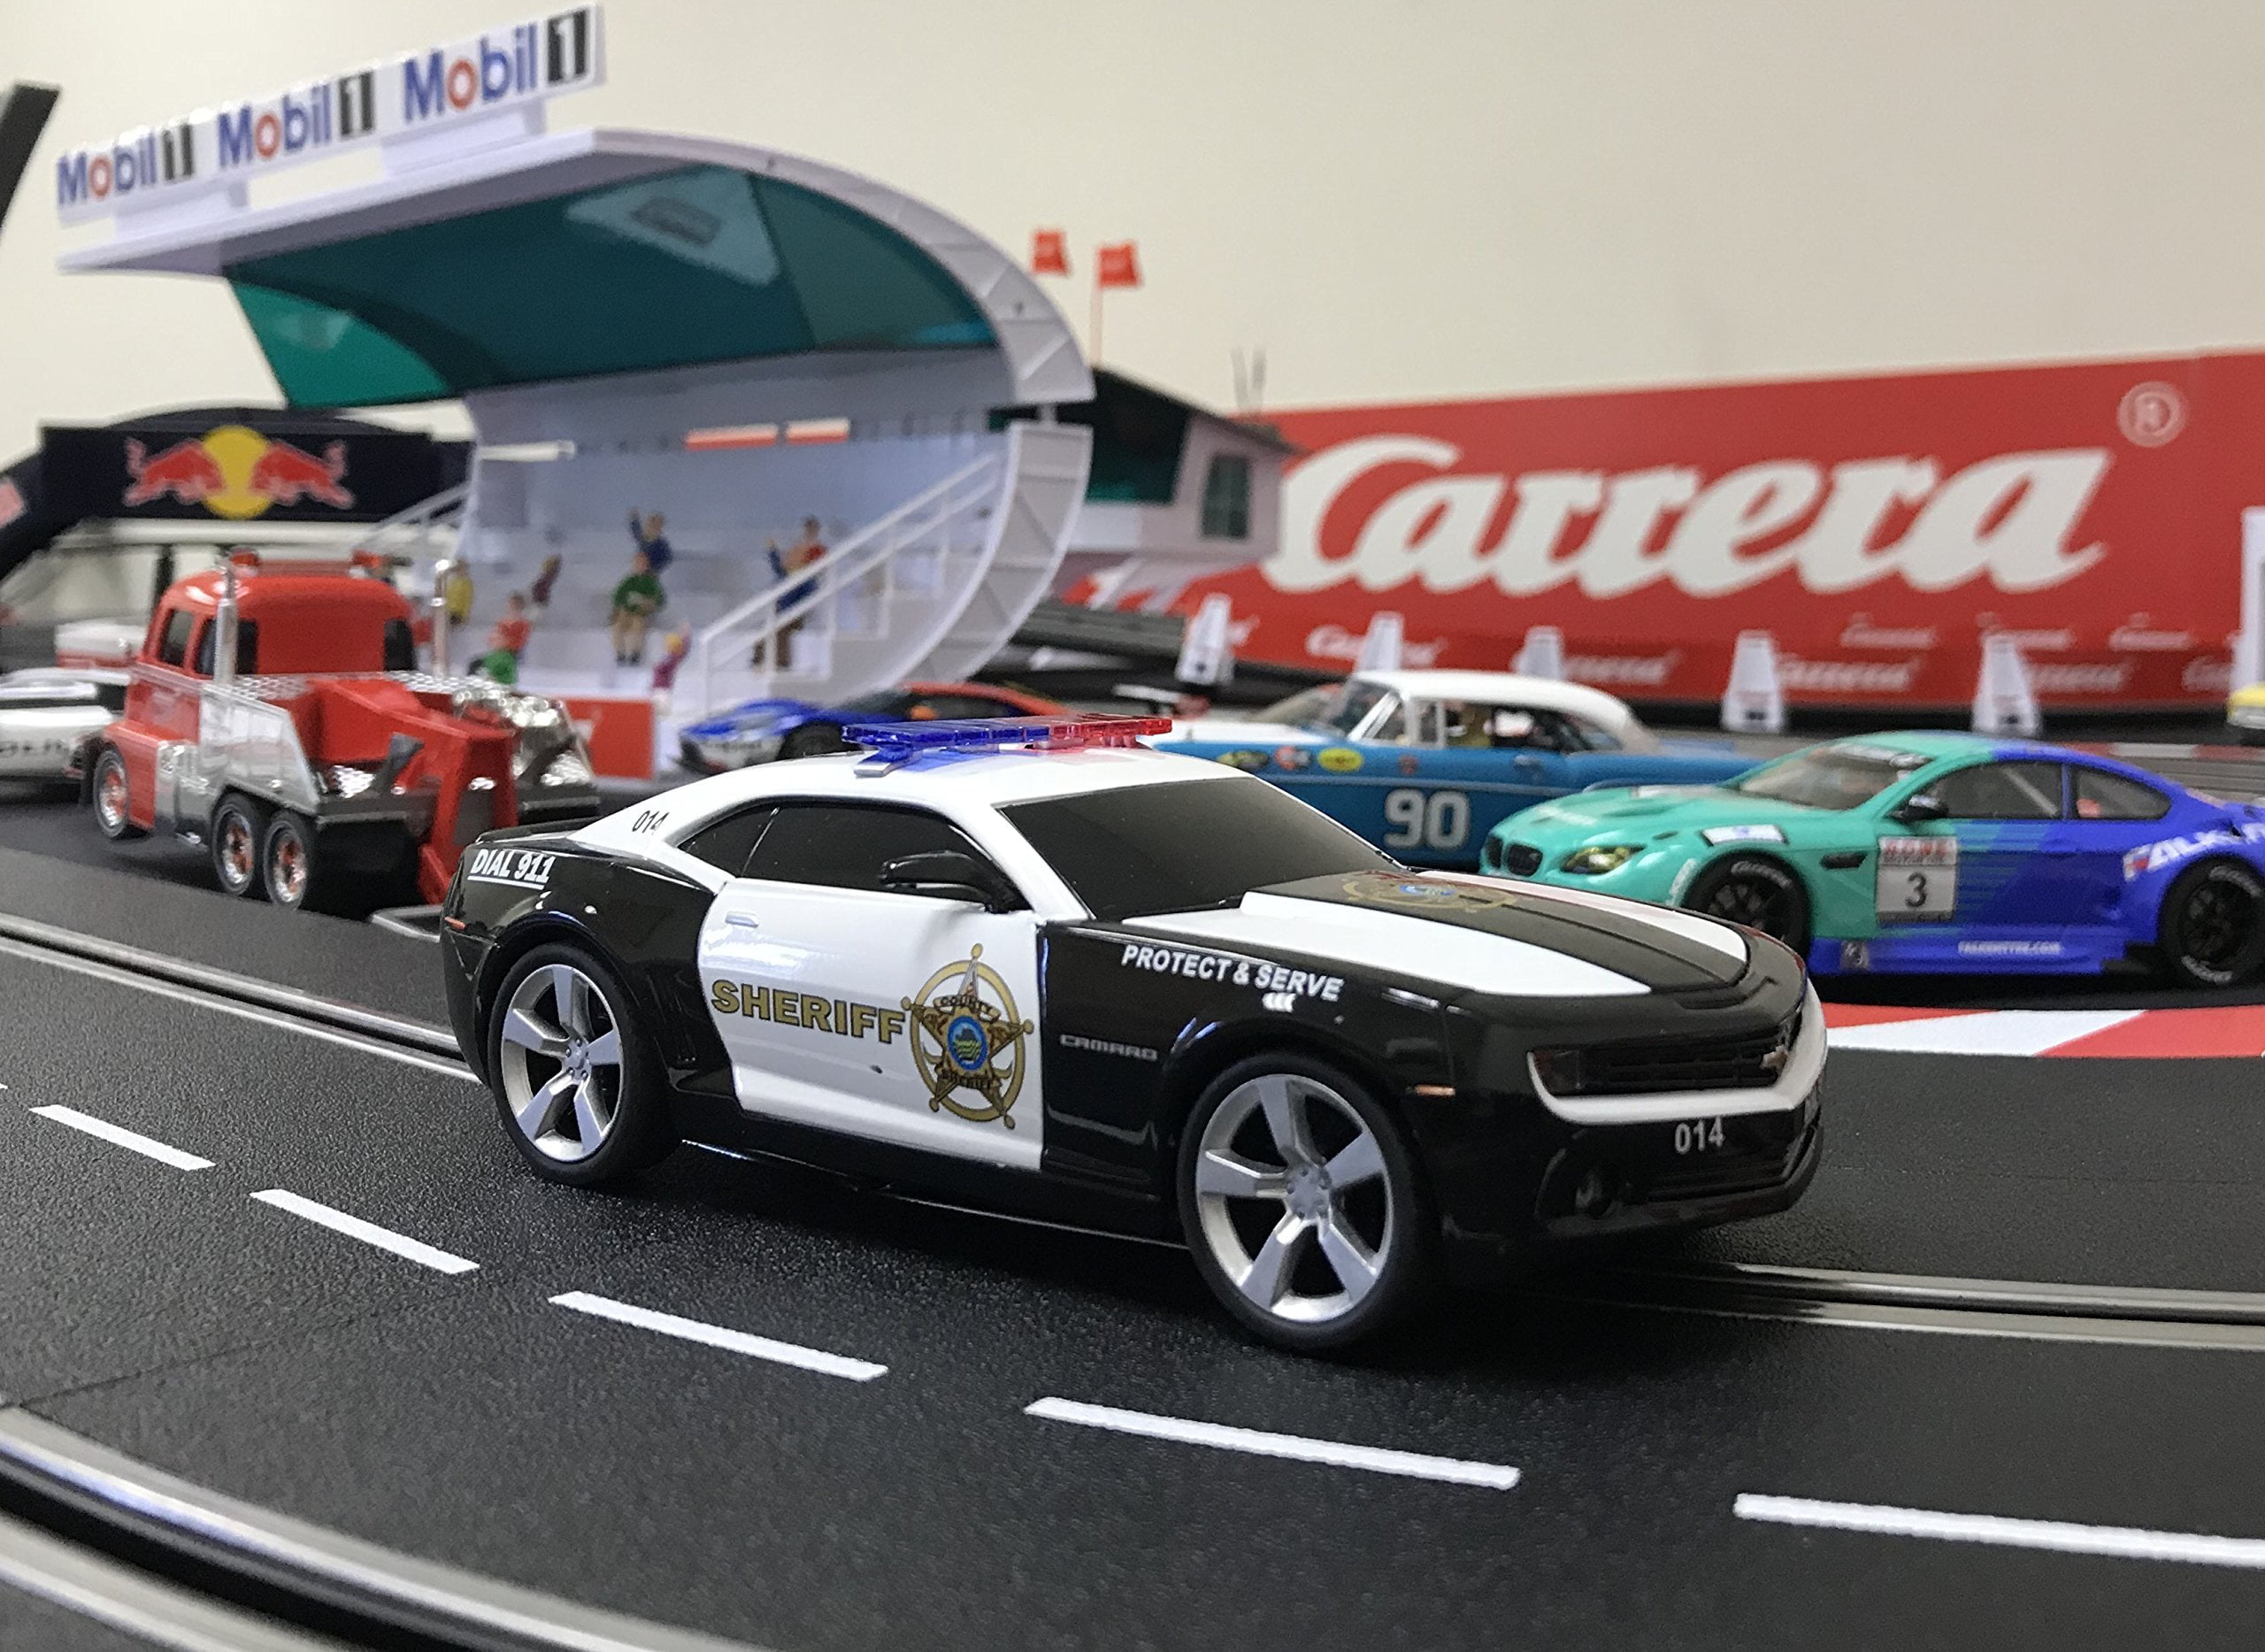 Carrera 30756 Digital 132 Slot Car Racing Vehicle 1:32 Scale - Chevrolet  Camaro Sheriff